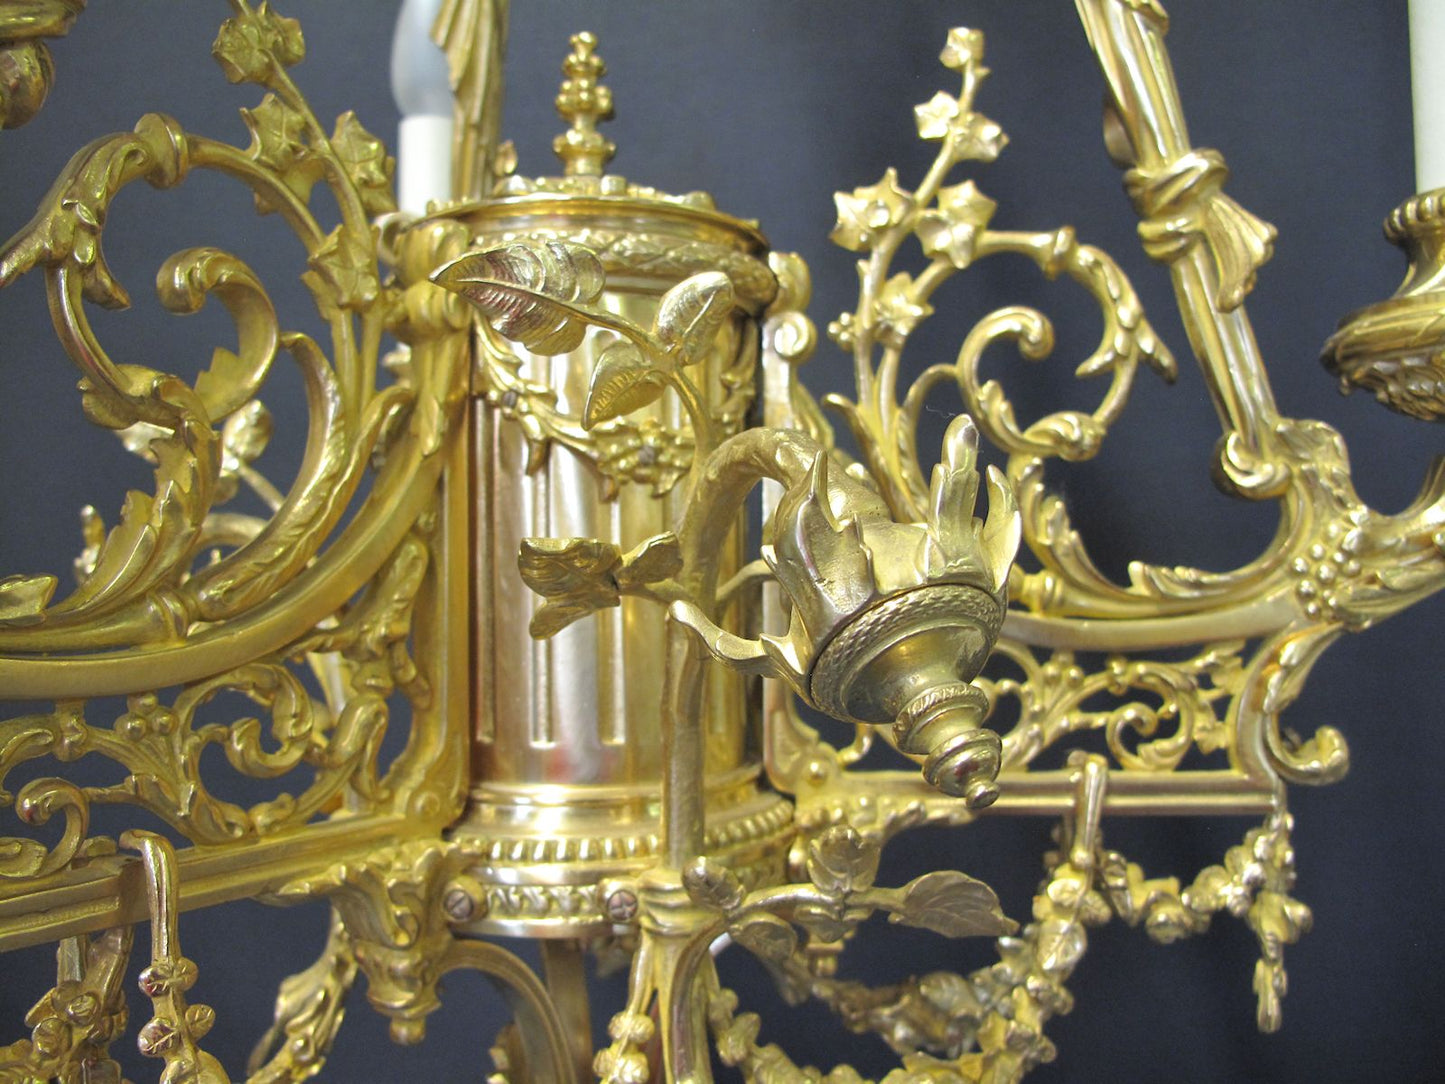 3 arm polished brass chandelier, showing fine detail